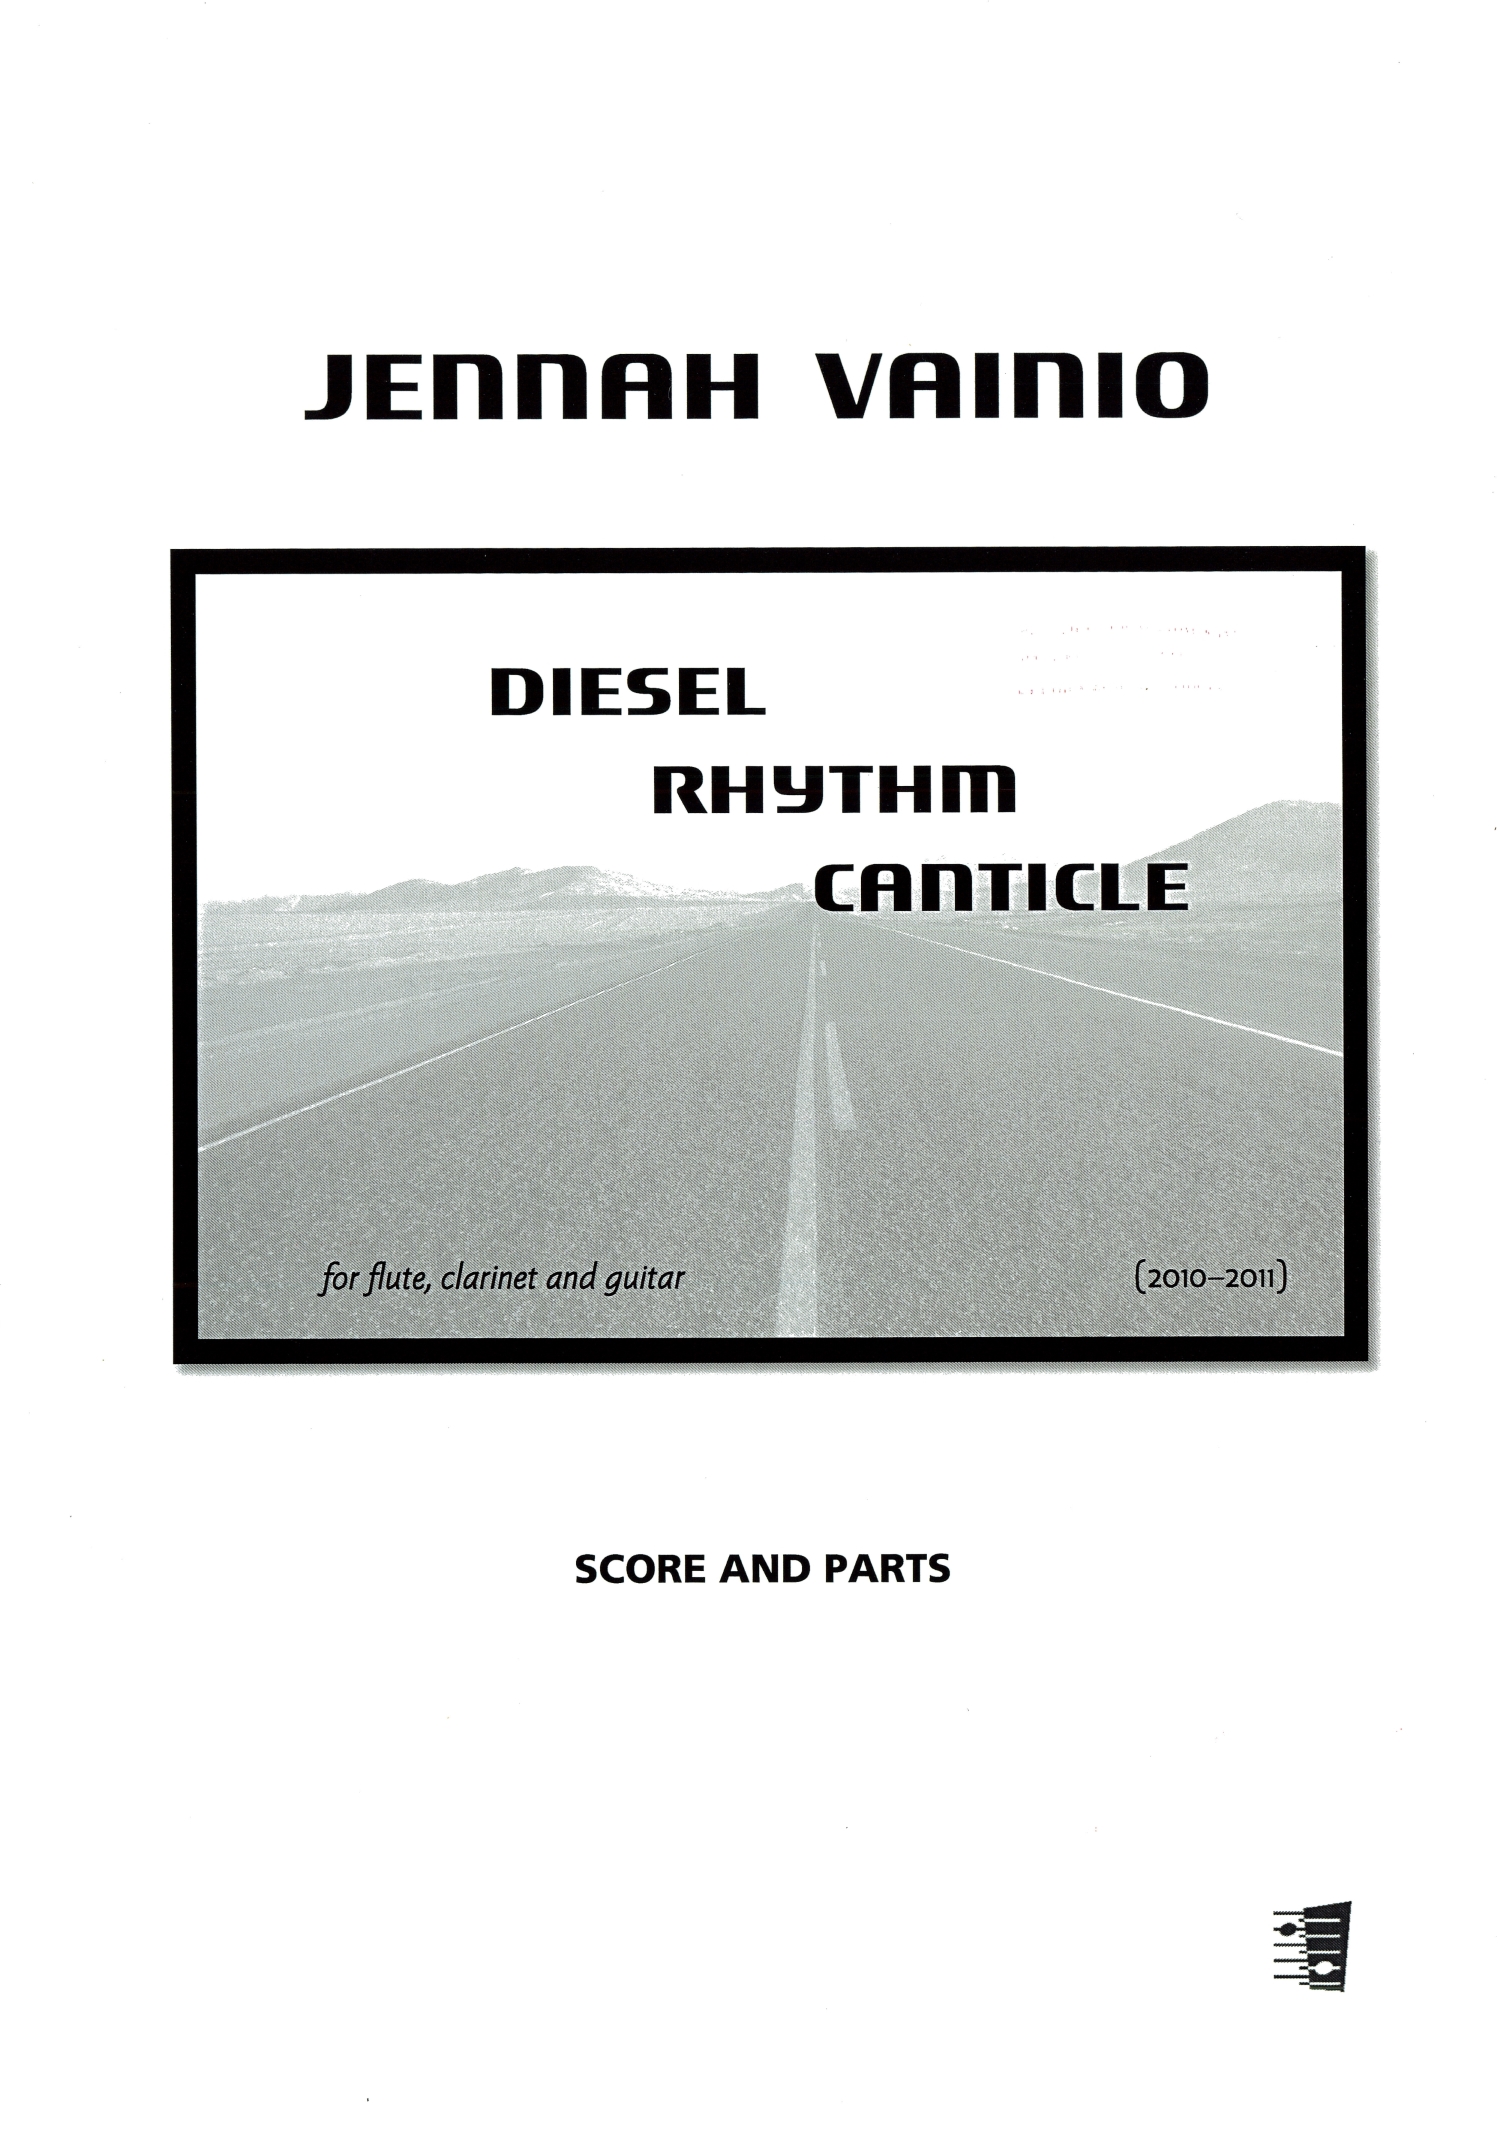 Diesel Rhythm Canticle (fl,cl,gu)(score,parts)